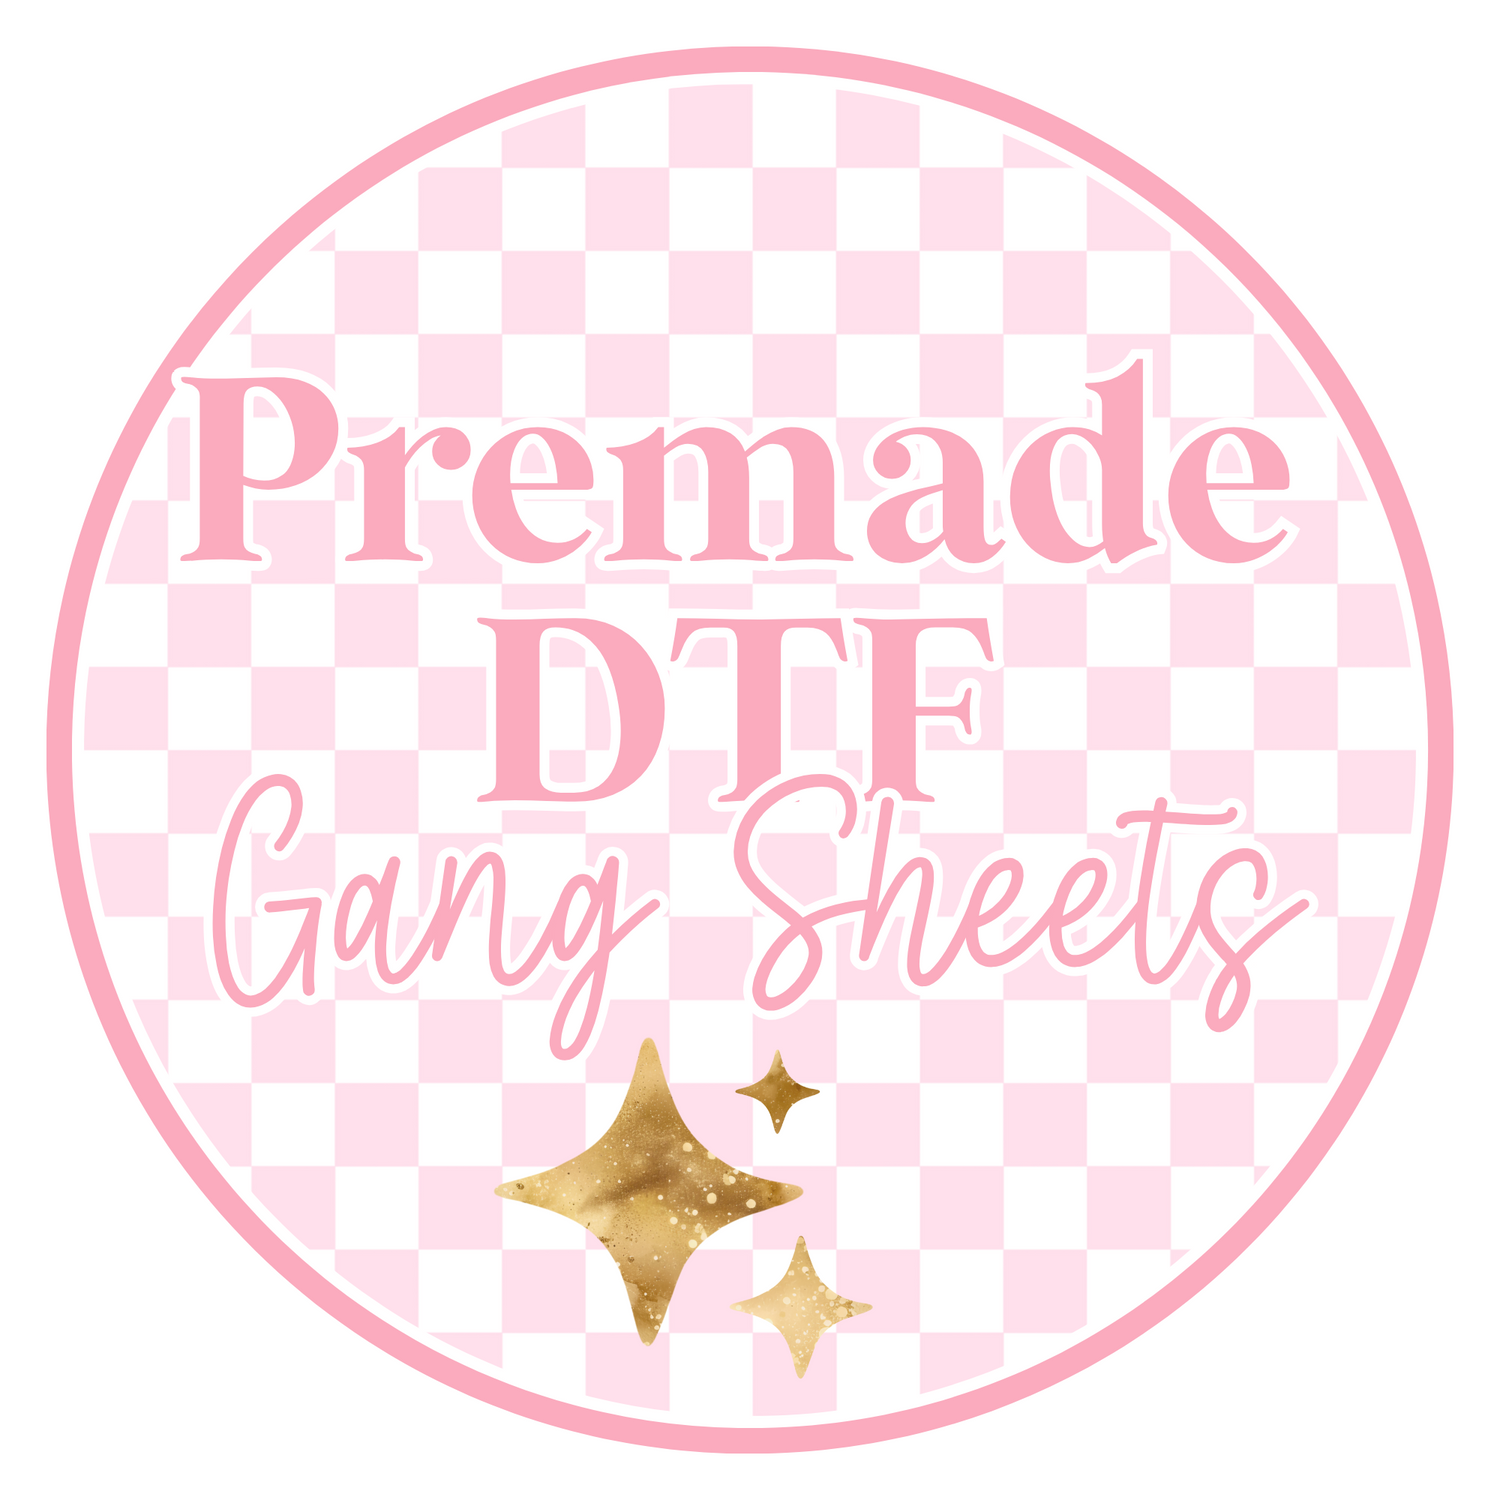 Pre-Made DTF Gang Sheets